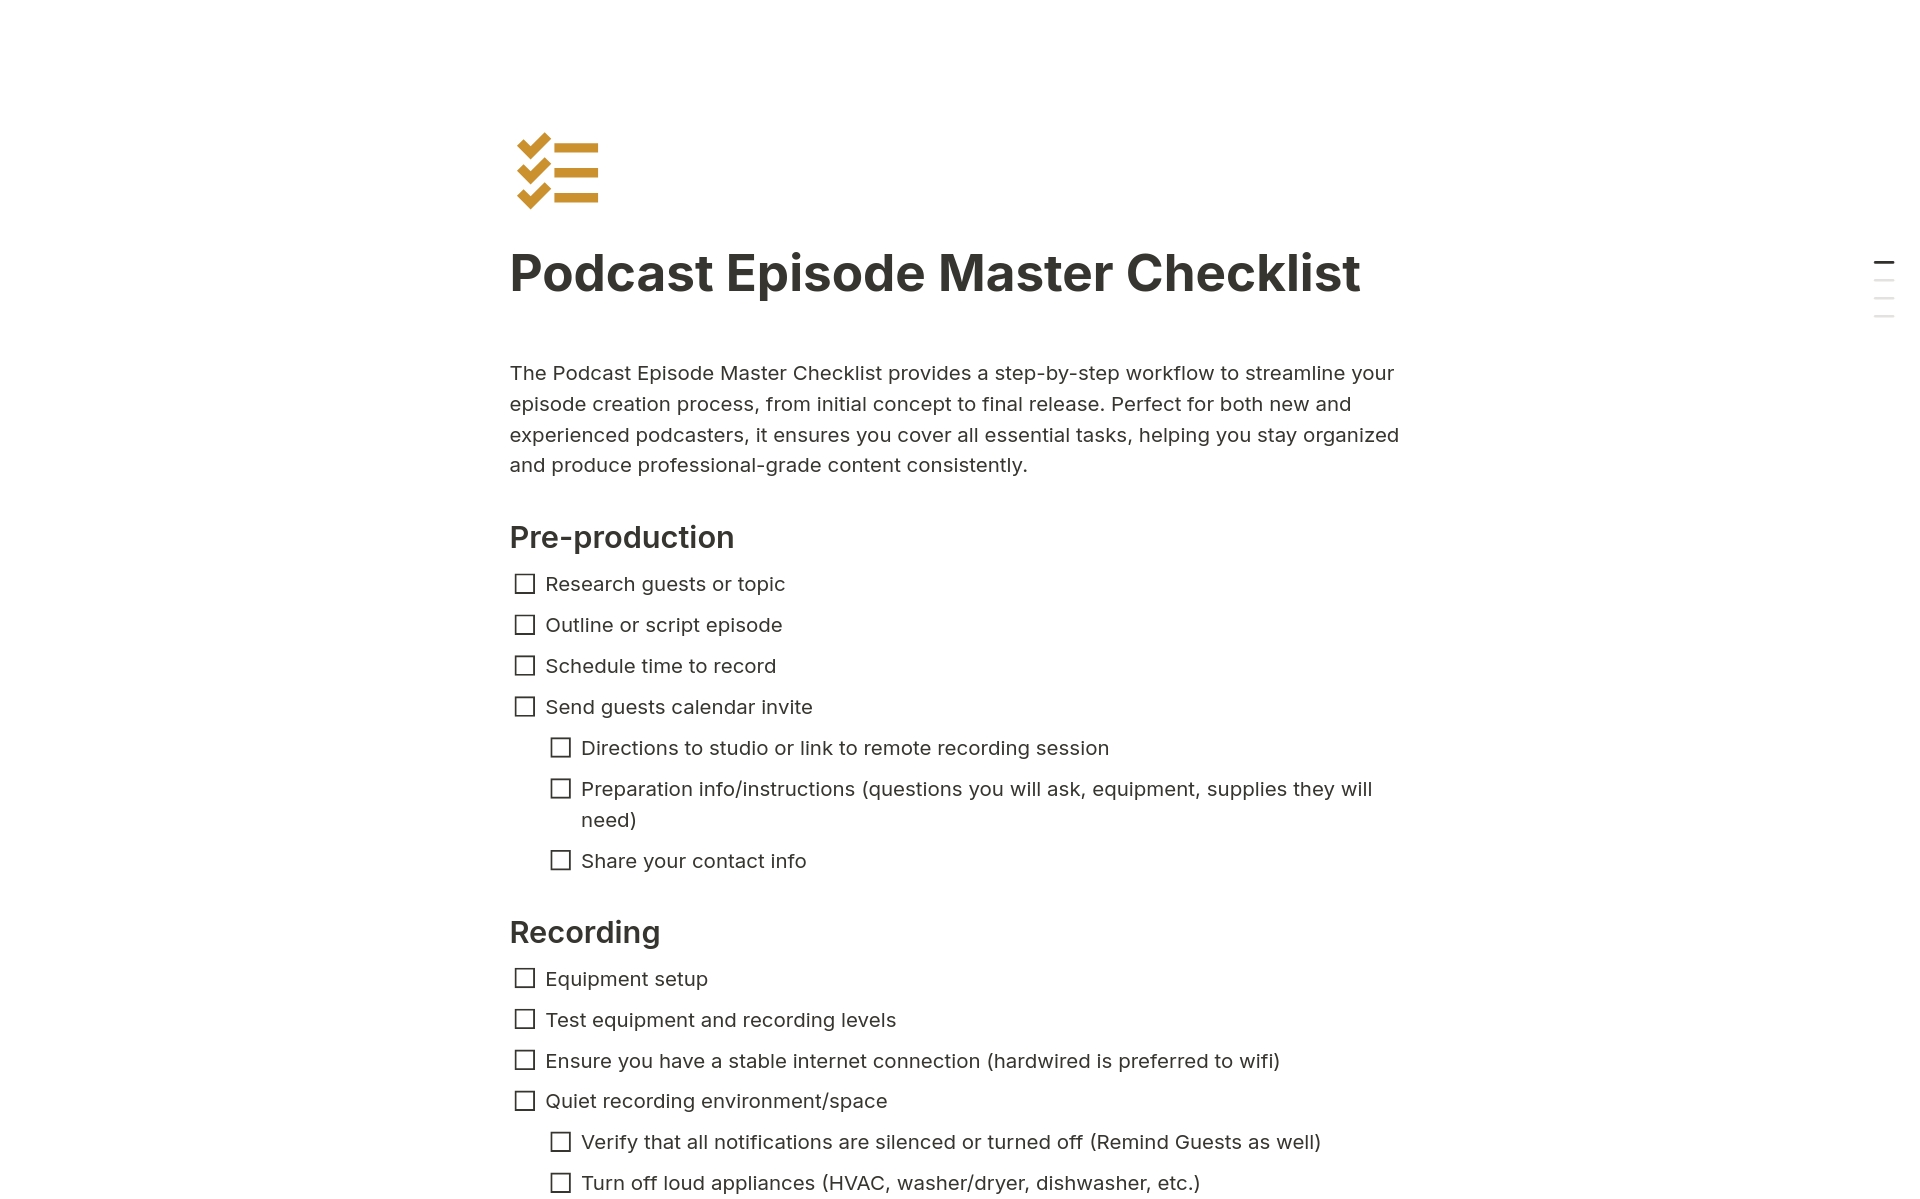 Podcast Episode Master Checklist님의 템플릿 미리보기